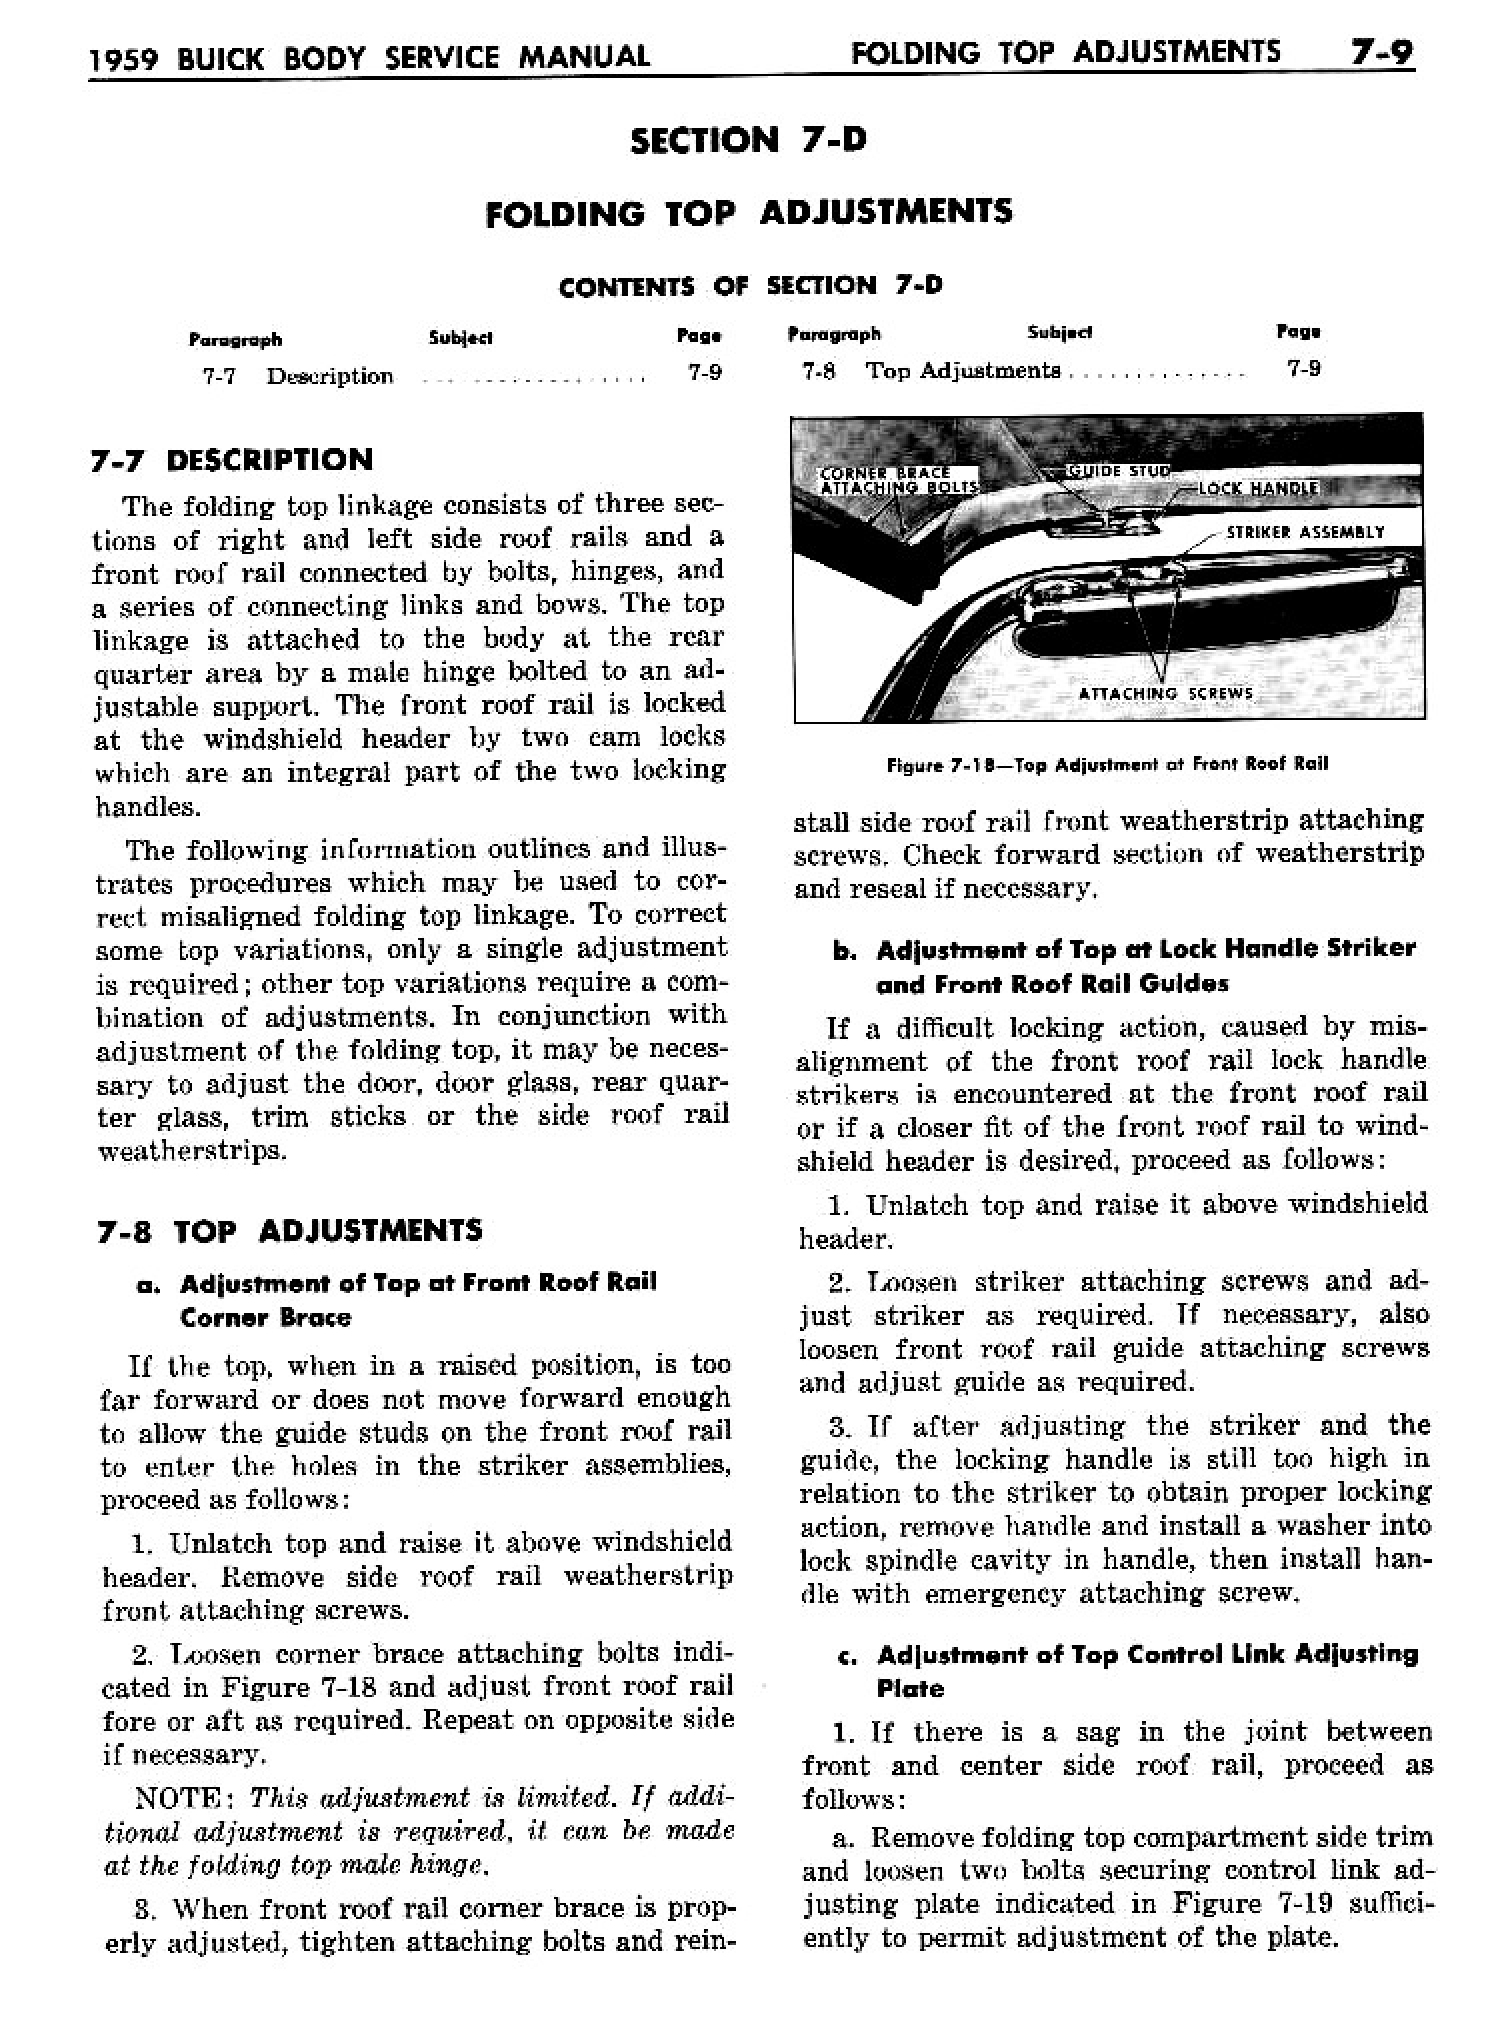 n_08 1959 Buick Body Service-Folding Top_9.jpg